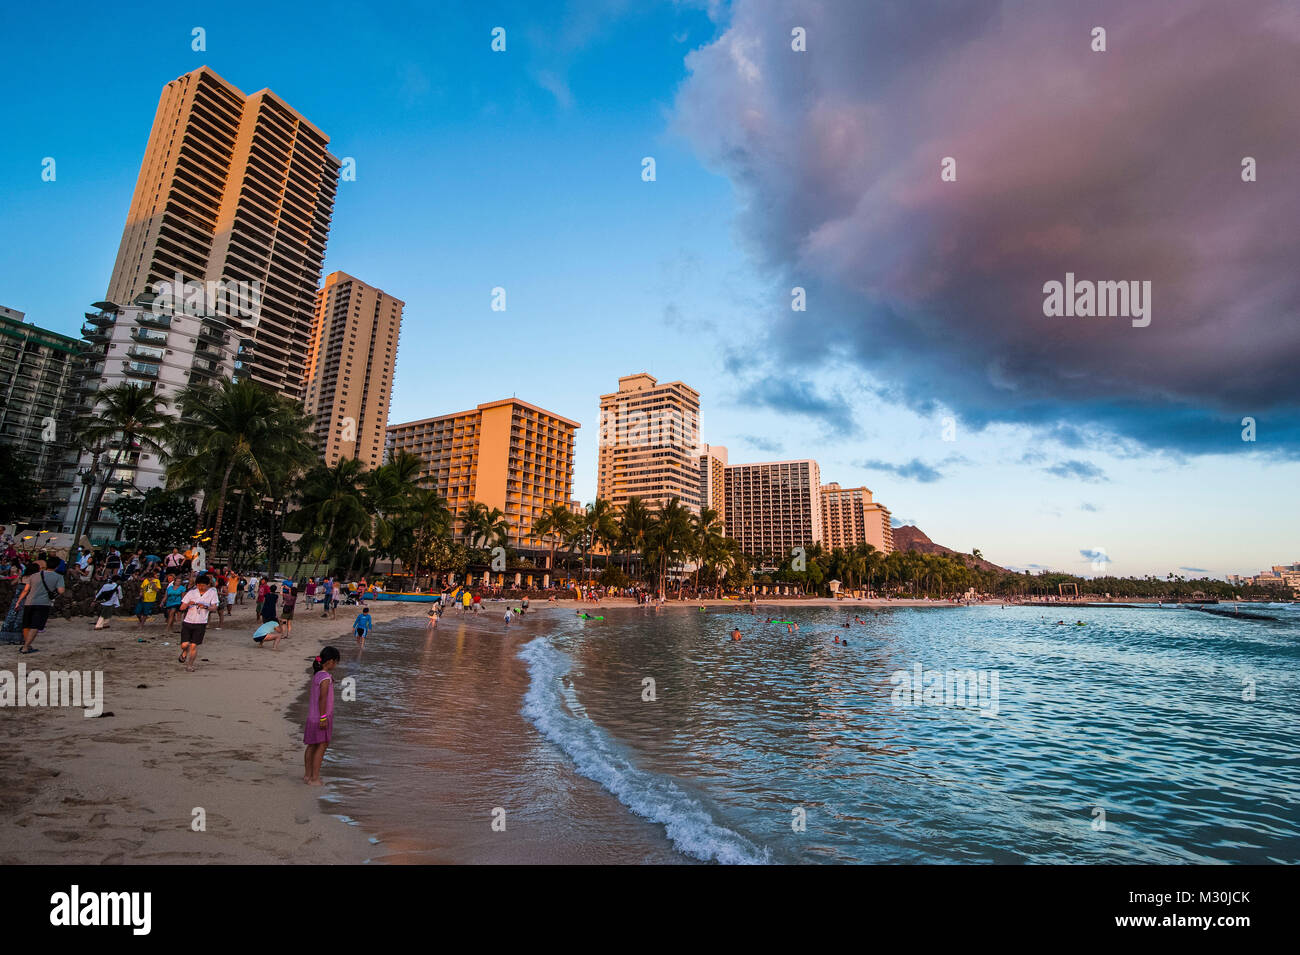 Late afternoon sun over the hotels on Waikiki Beach, Oahu, Hawaii Stock Photo